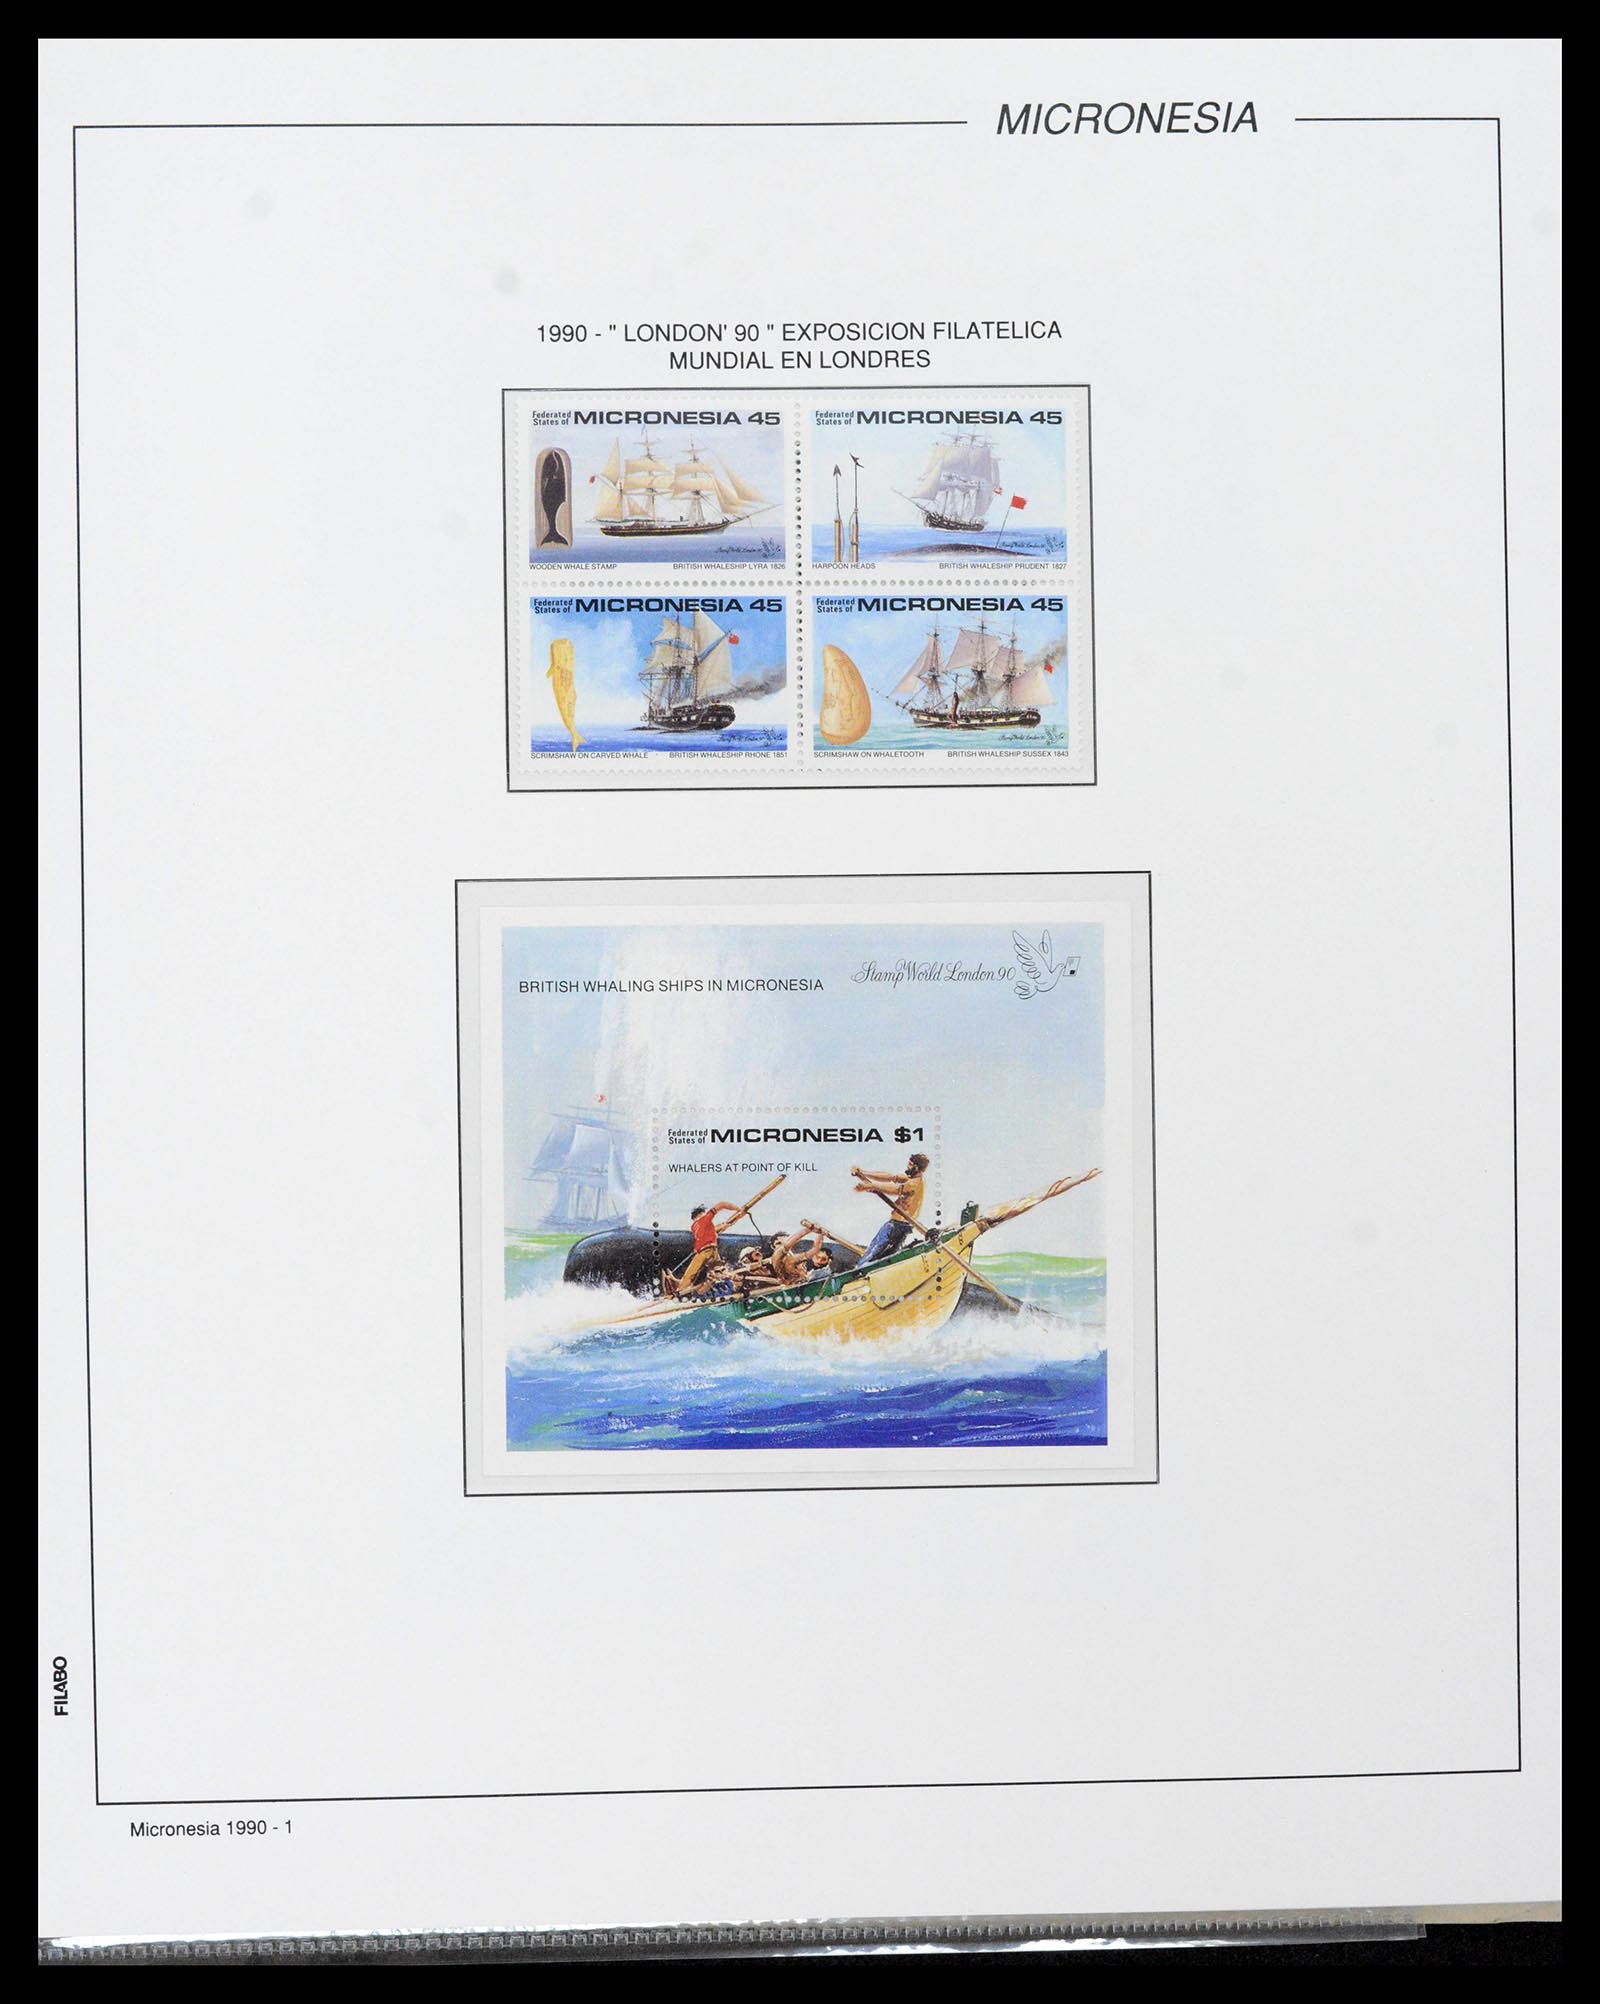 39222 0085 - Stamp collection 39222 Palau, Micronesia and Marshall islands 1980-1995.